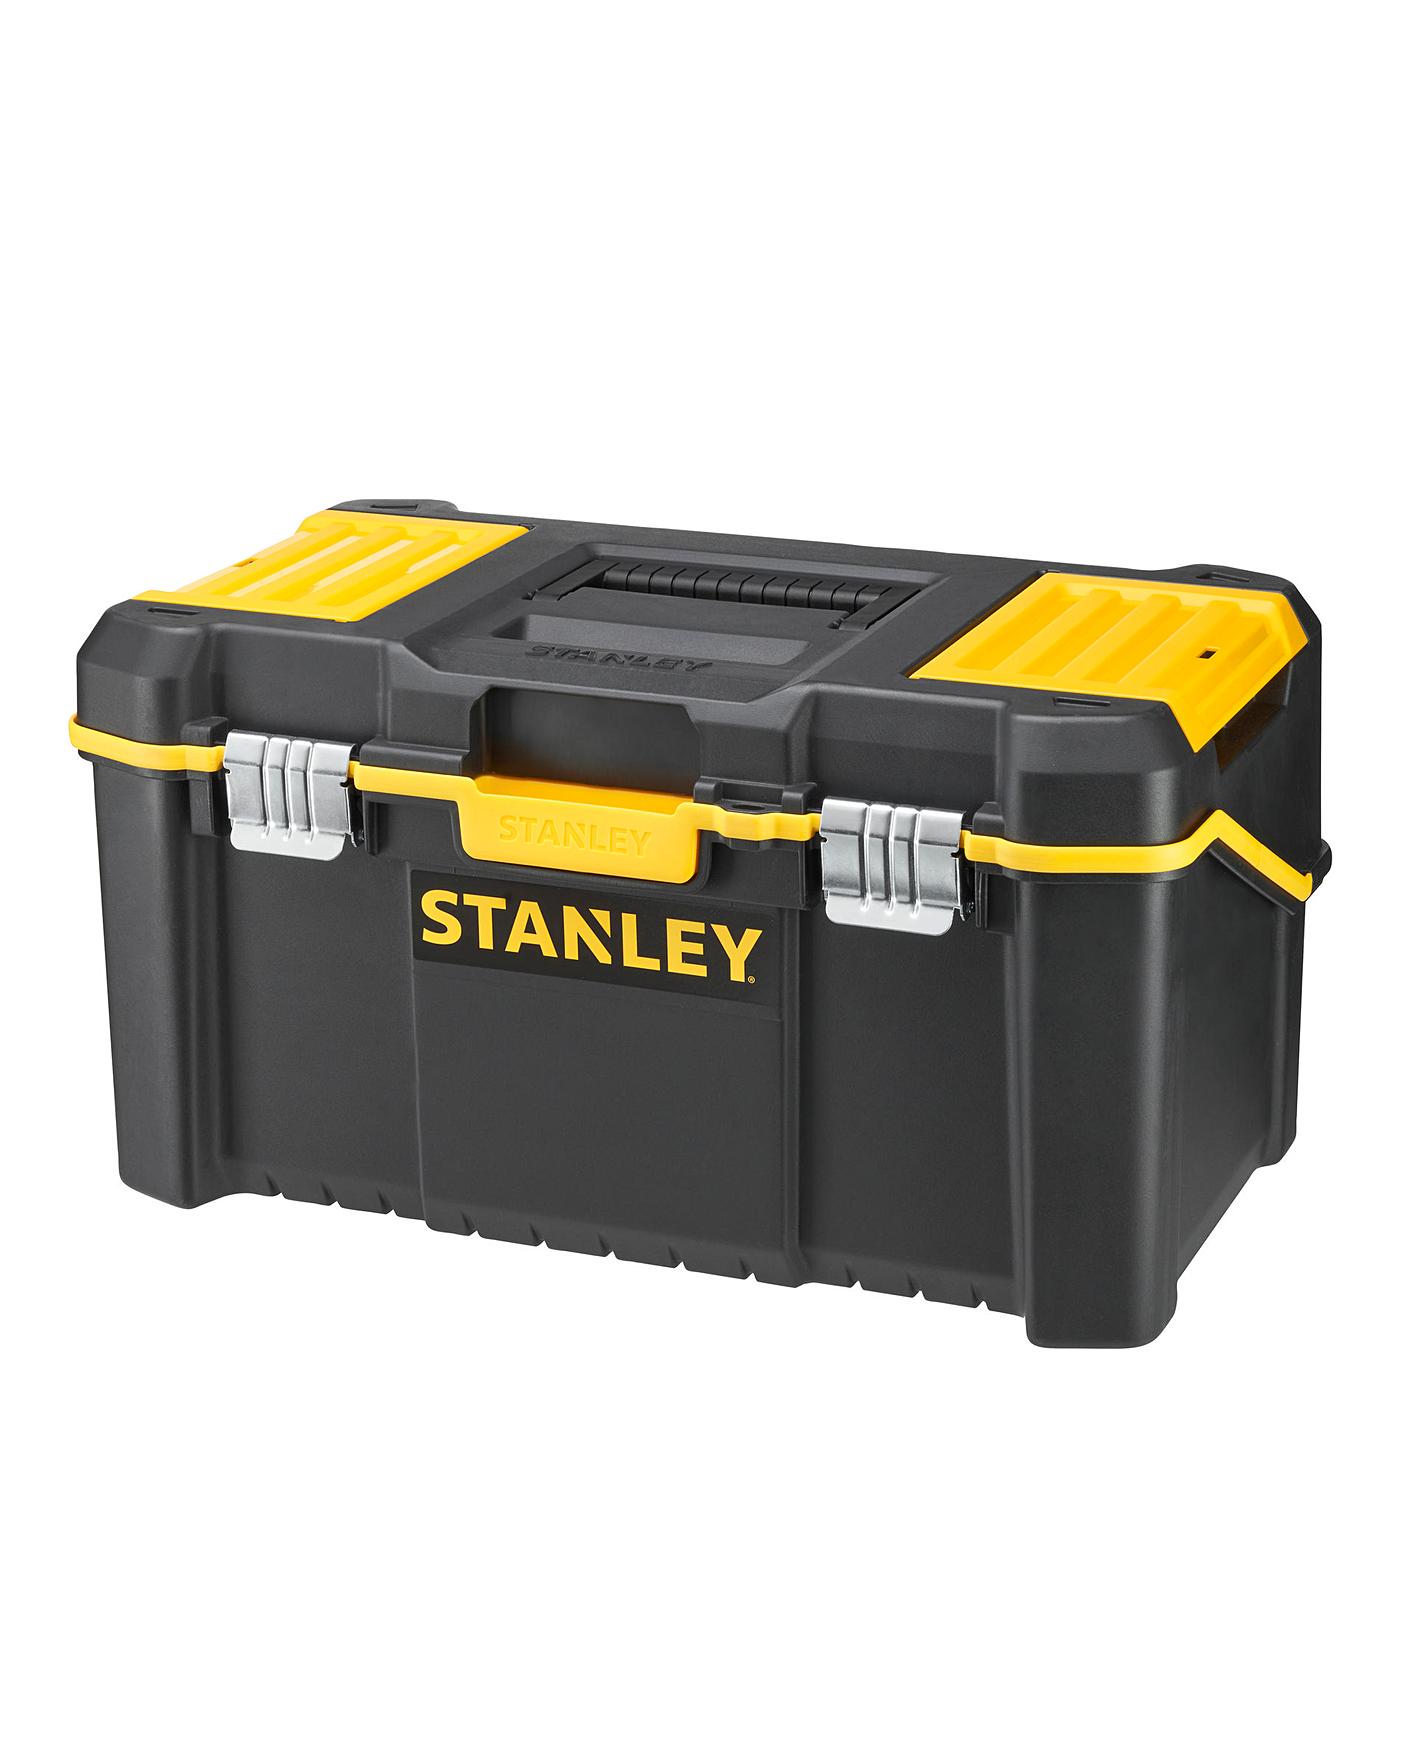 New Stanley 2-Level Cantilever Organizer